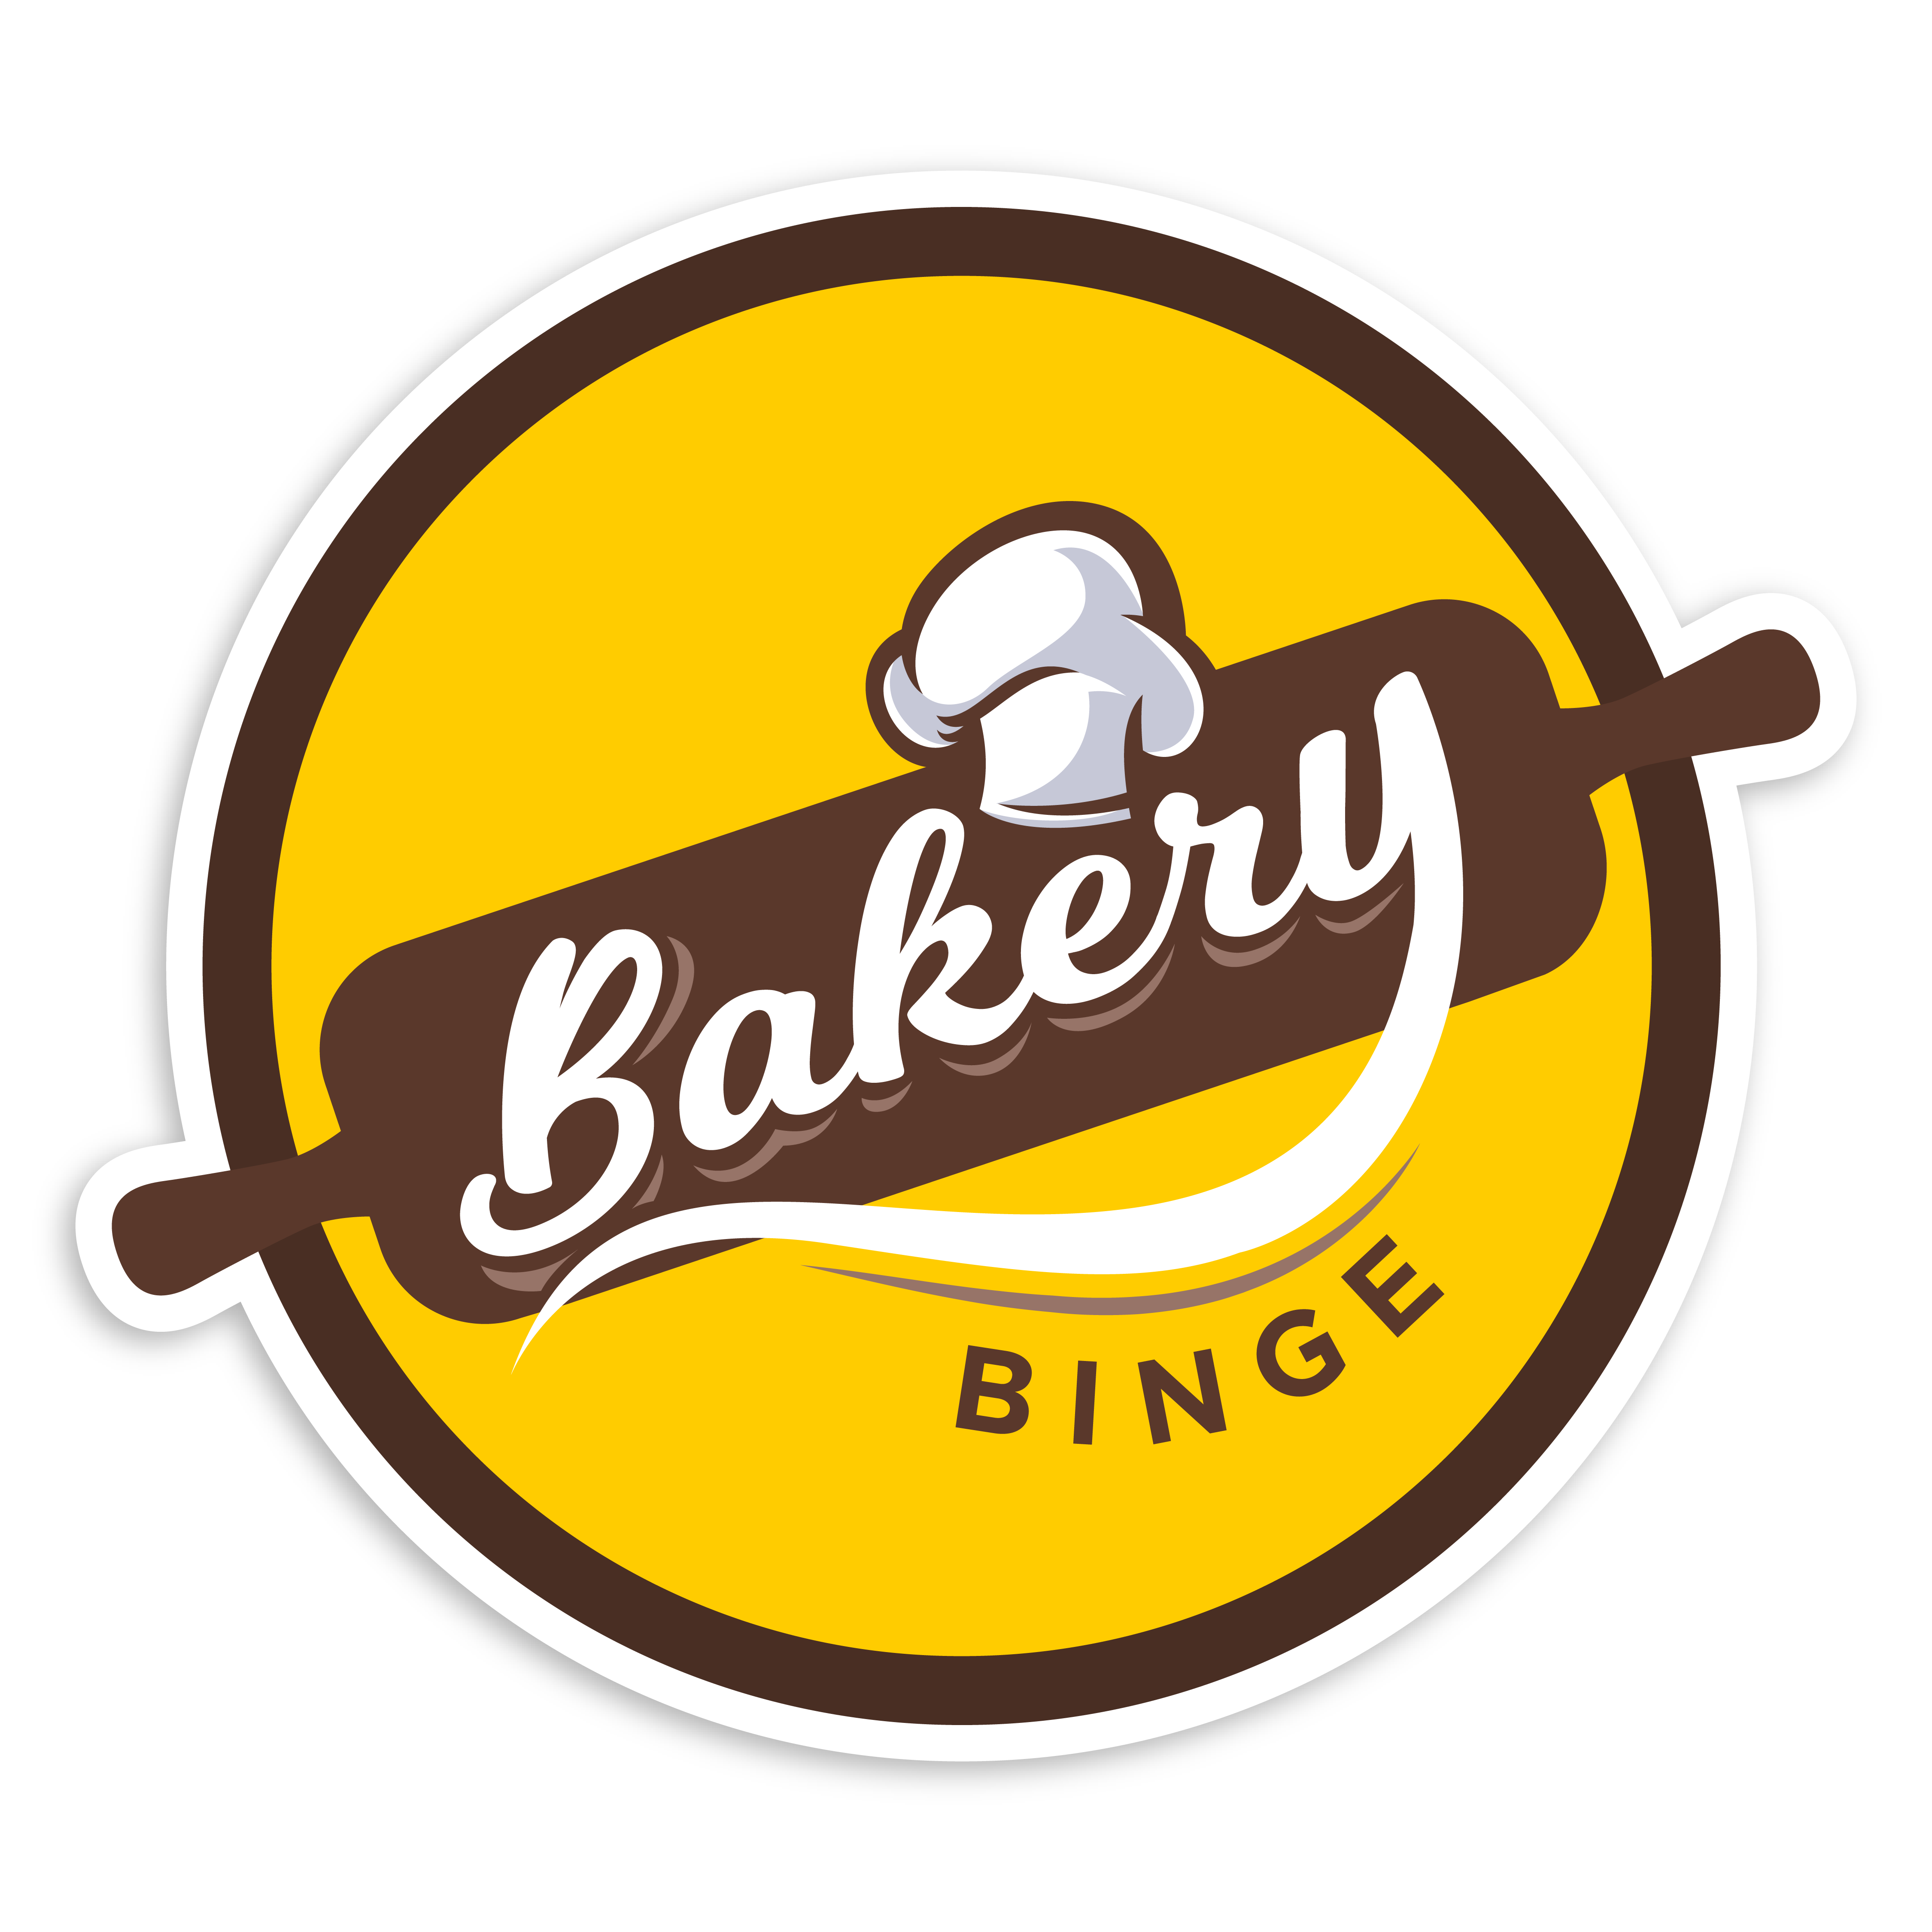 Bakery Binge